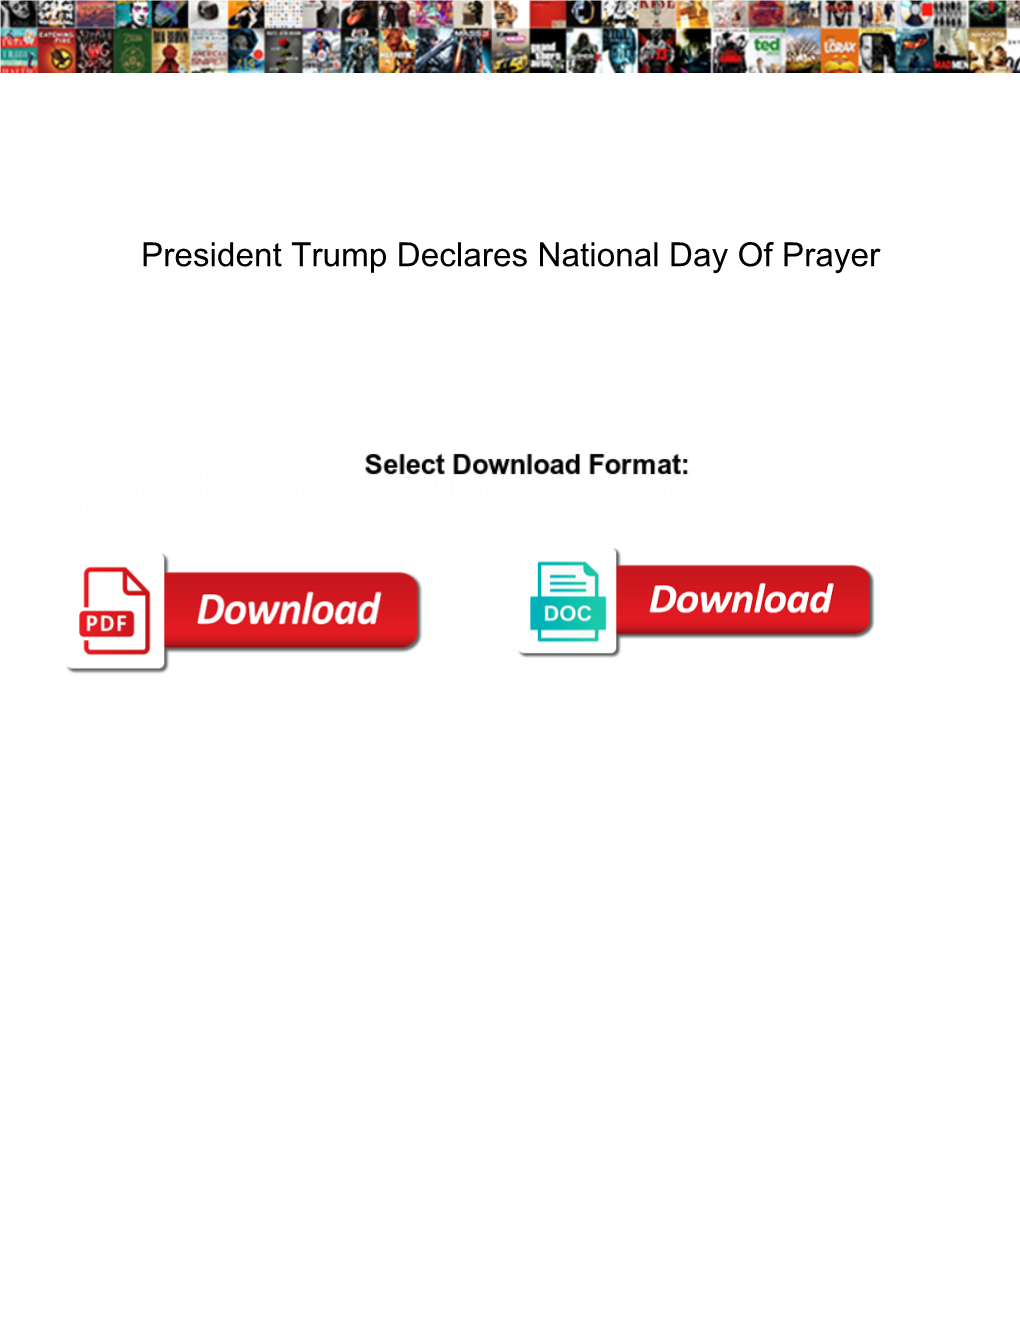 President Trump Declares National Day of Prayer